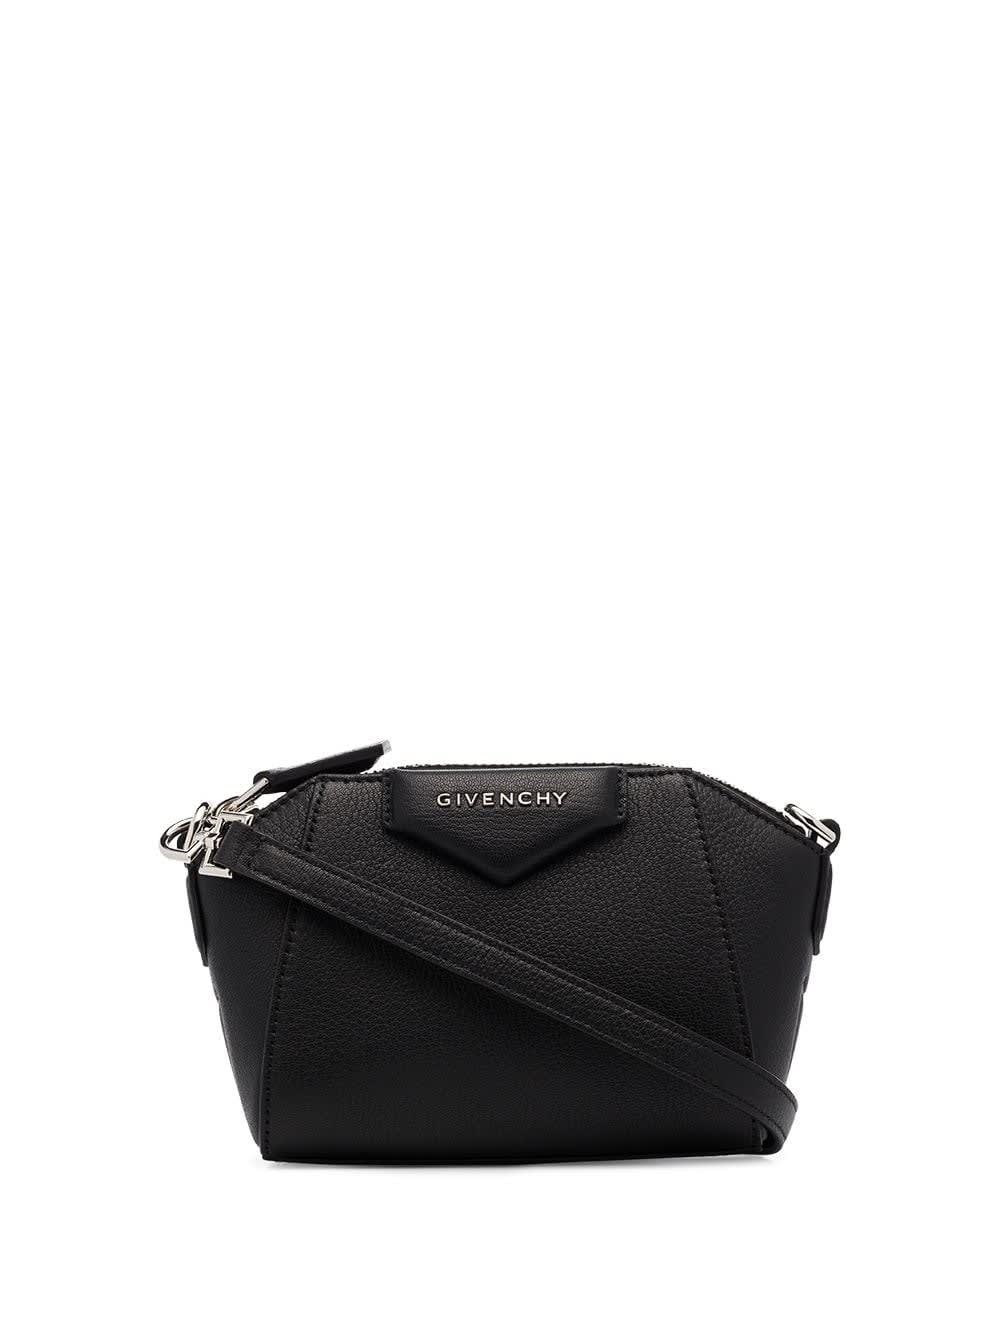 Givenchy Antigona Crossbody Bag In Black Leather With Logo